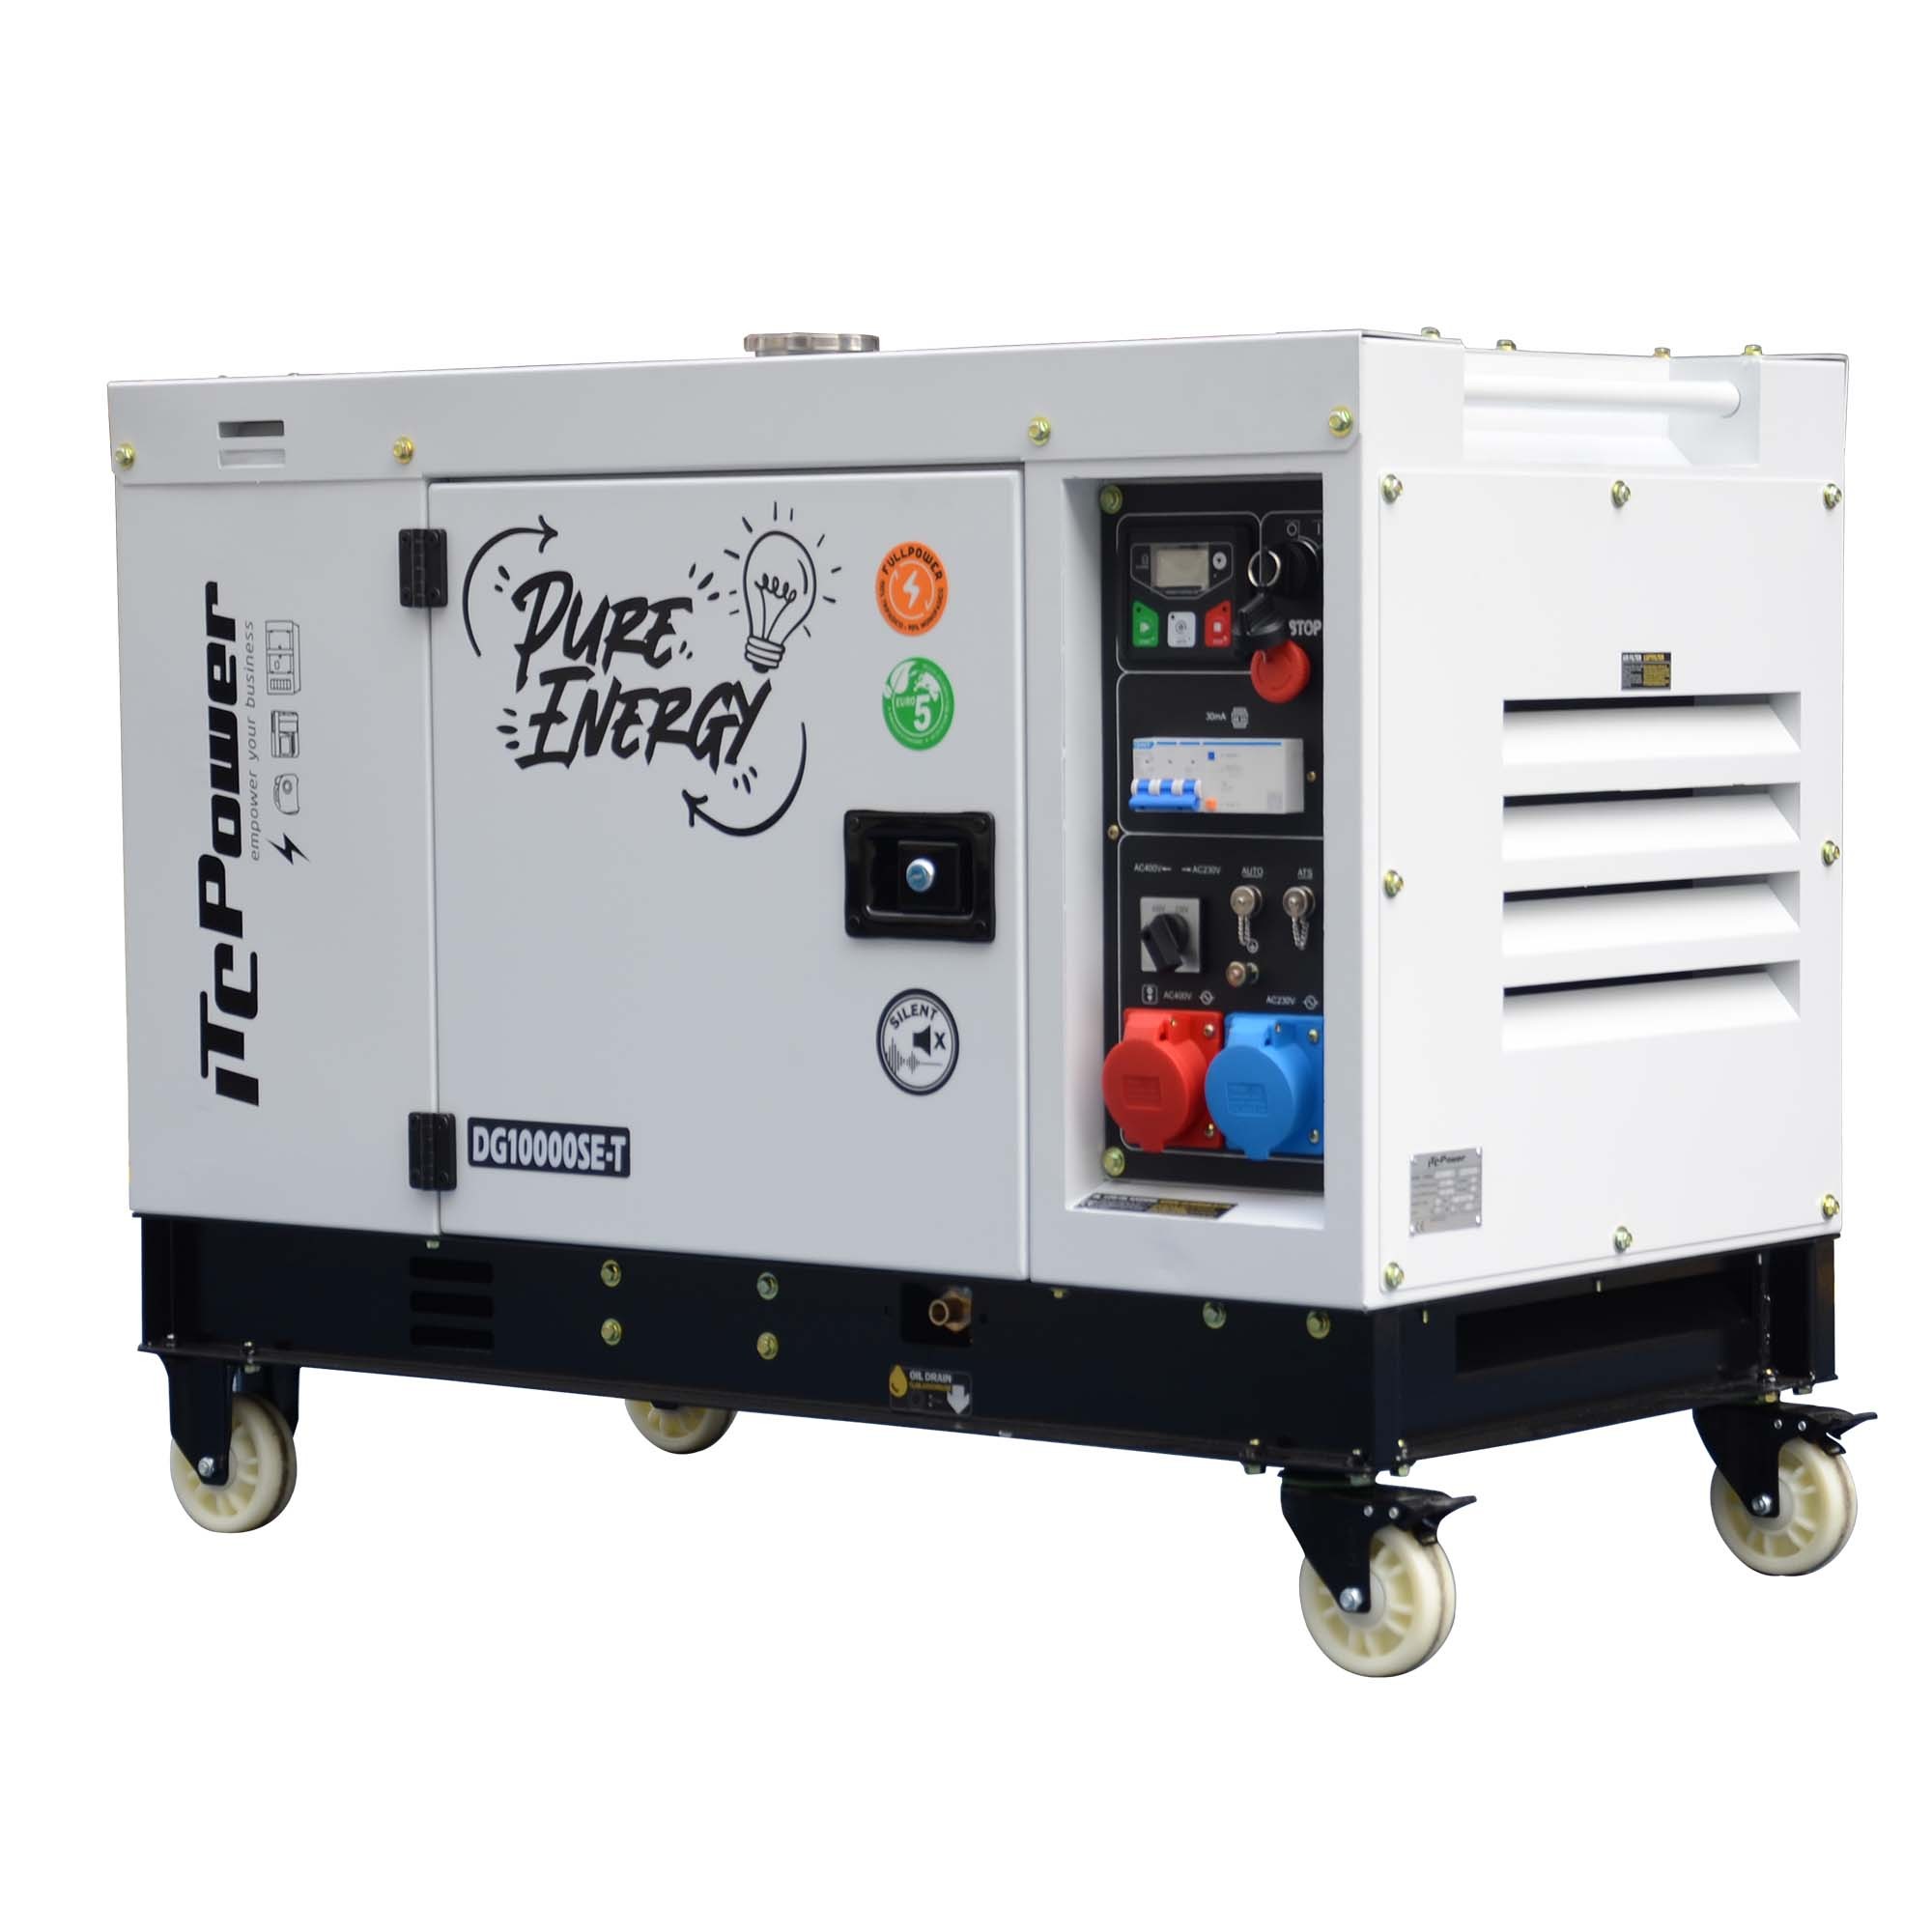 ITC POWER 10,6 kVA Diesel DG10000SE-T Stromaggregat Stromerzeuger